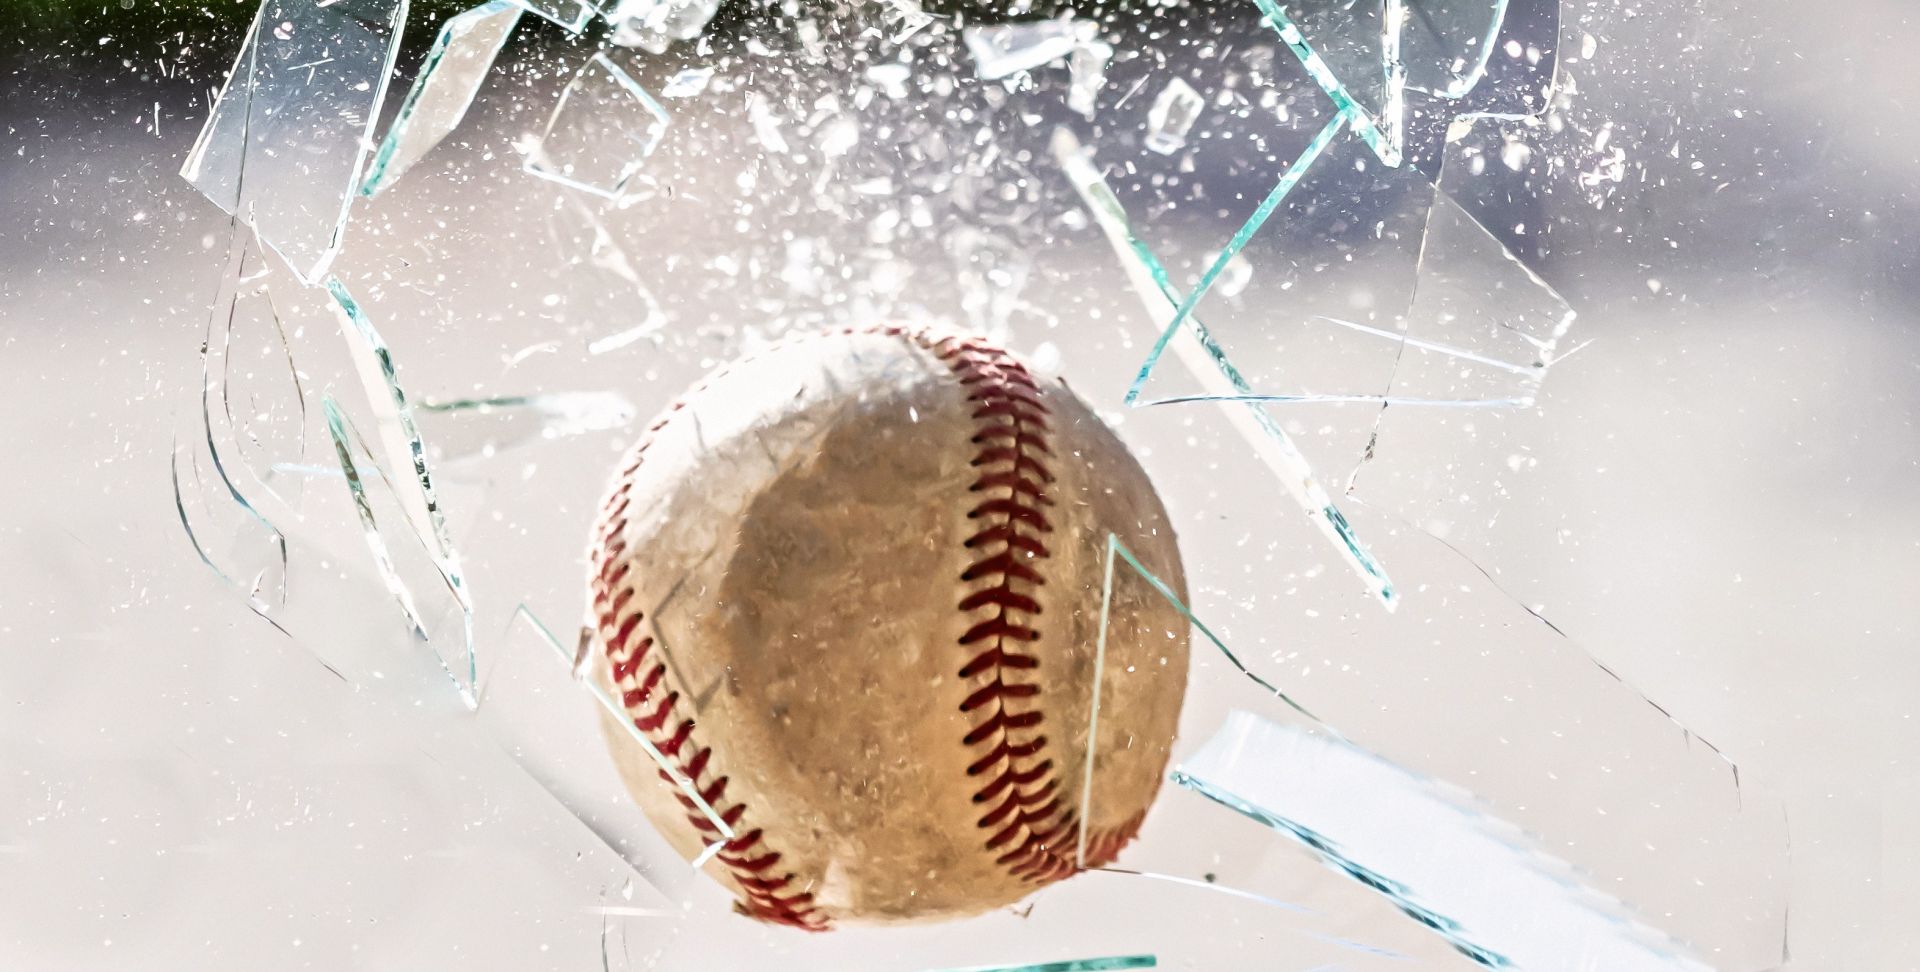 A baseball shattering a glass window